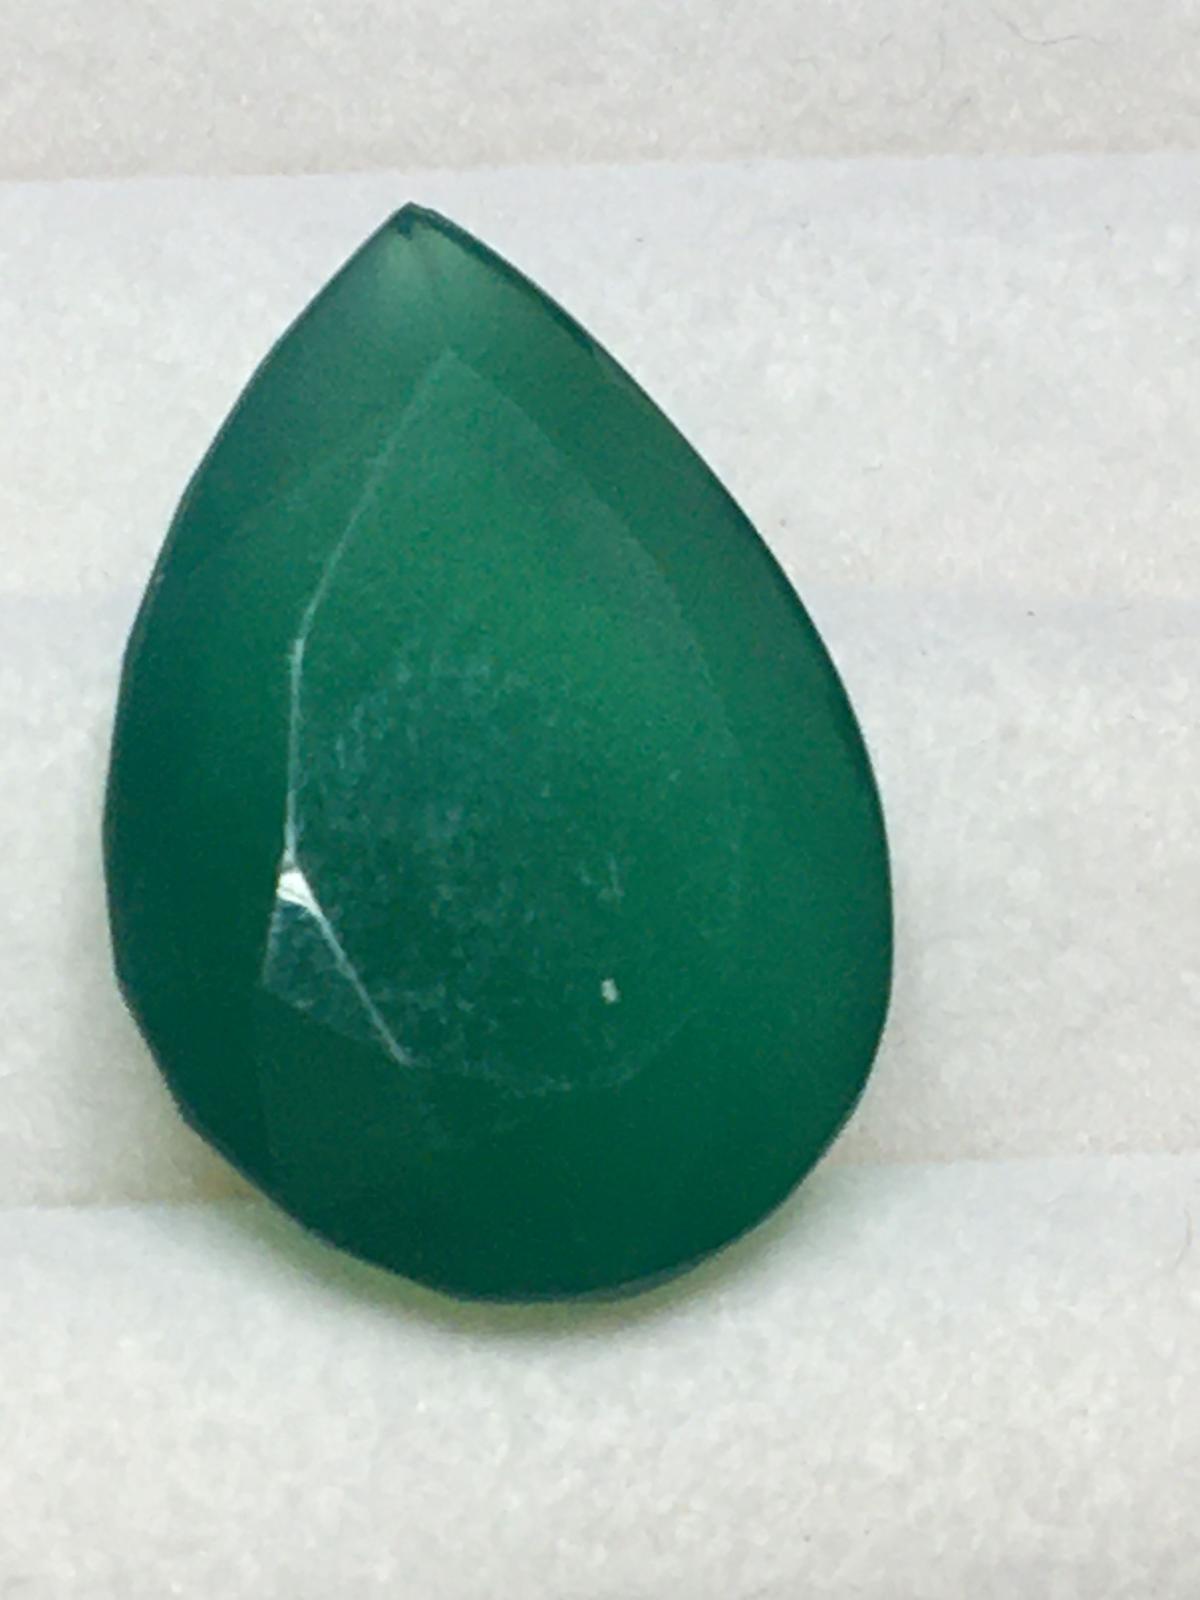 Emerald Tear Drop Cut Natural Earth Mined Columbian Glowing Green 20.4+ Cts Wow Gem